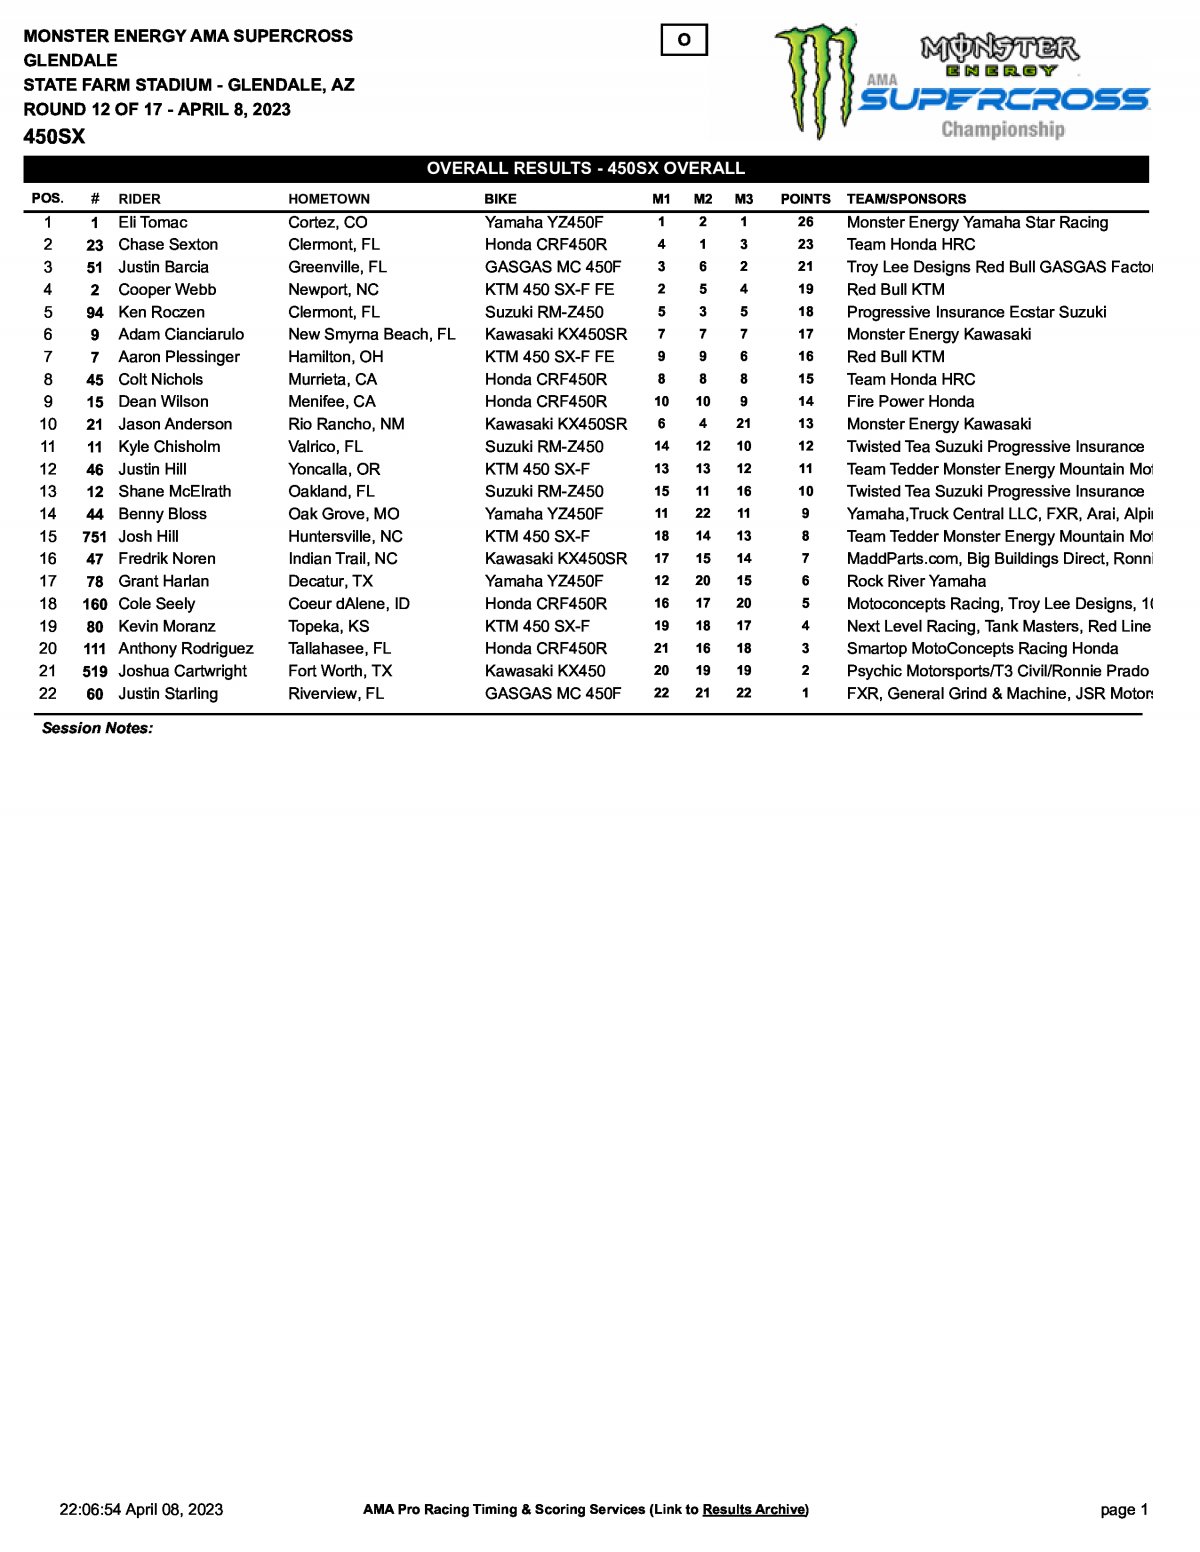 Результат 12 этапа AMA Supercross 450SX 2023, Glendale - Triple Crown (8/04/2023)